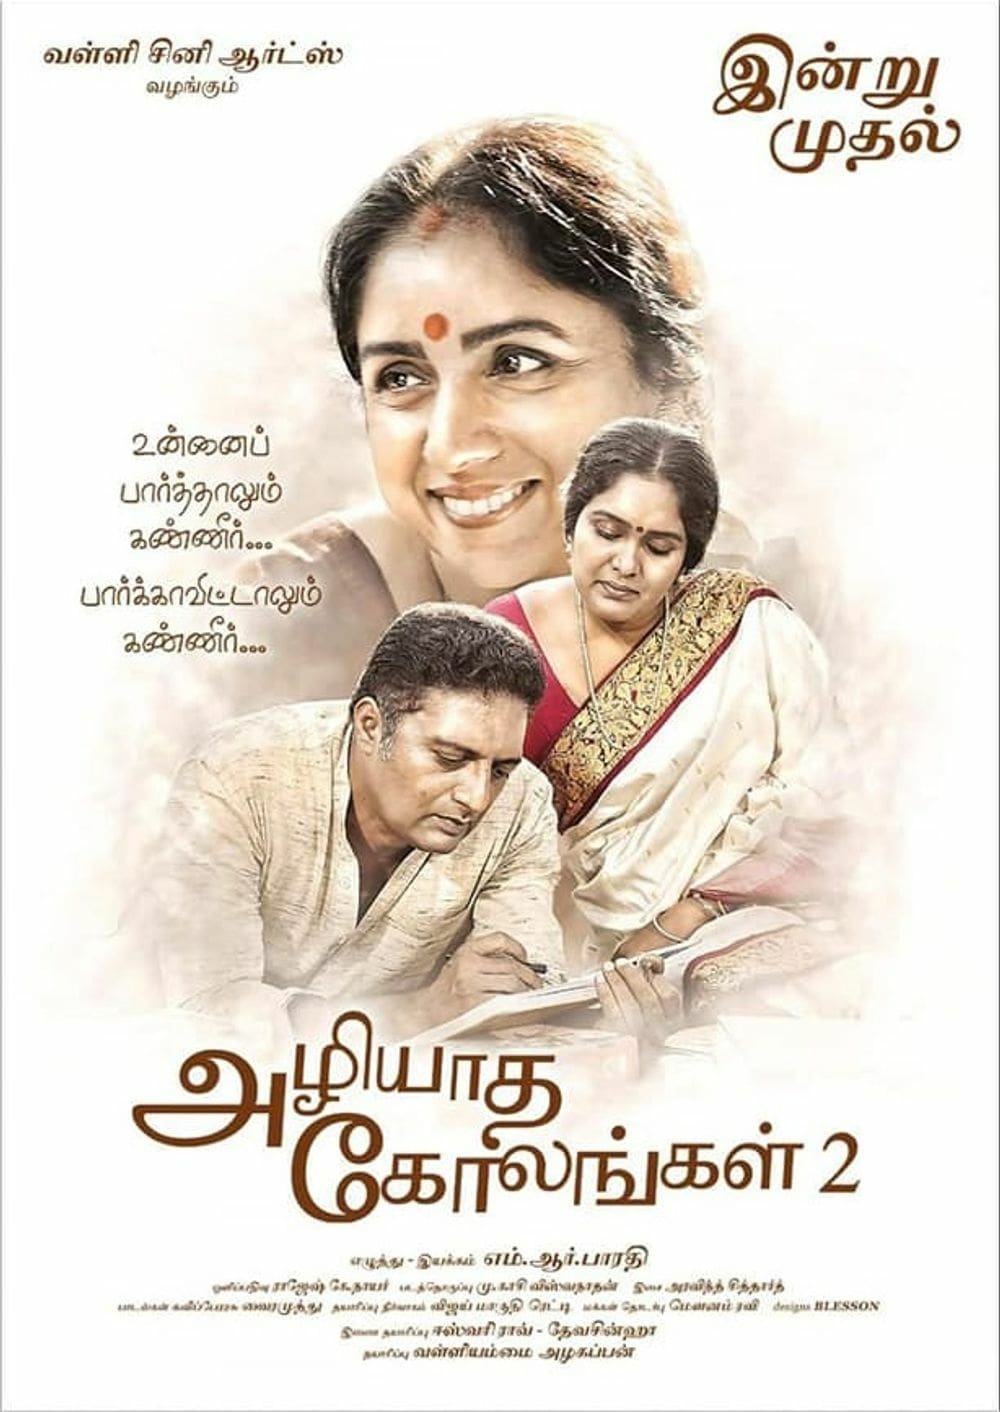 Poster for the movie "Azhiyatha Kolangal 2"